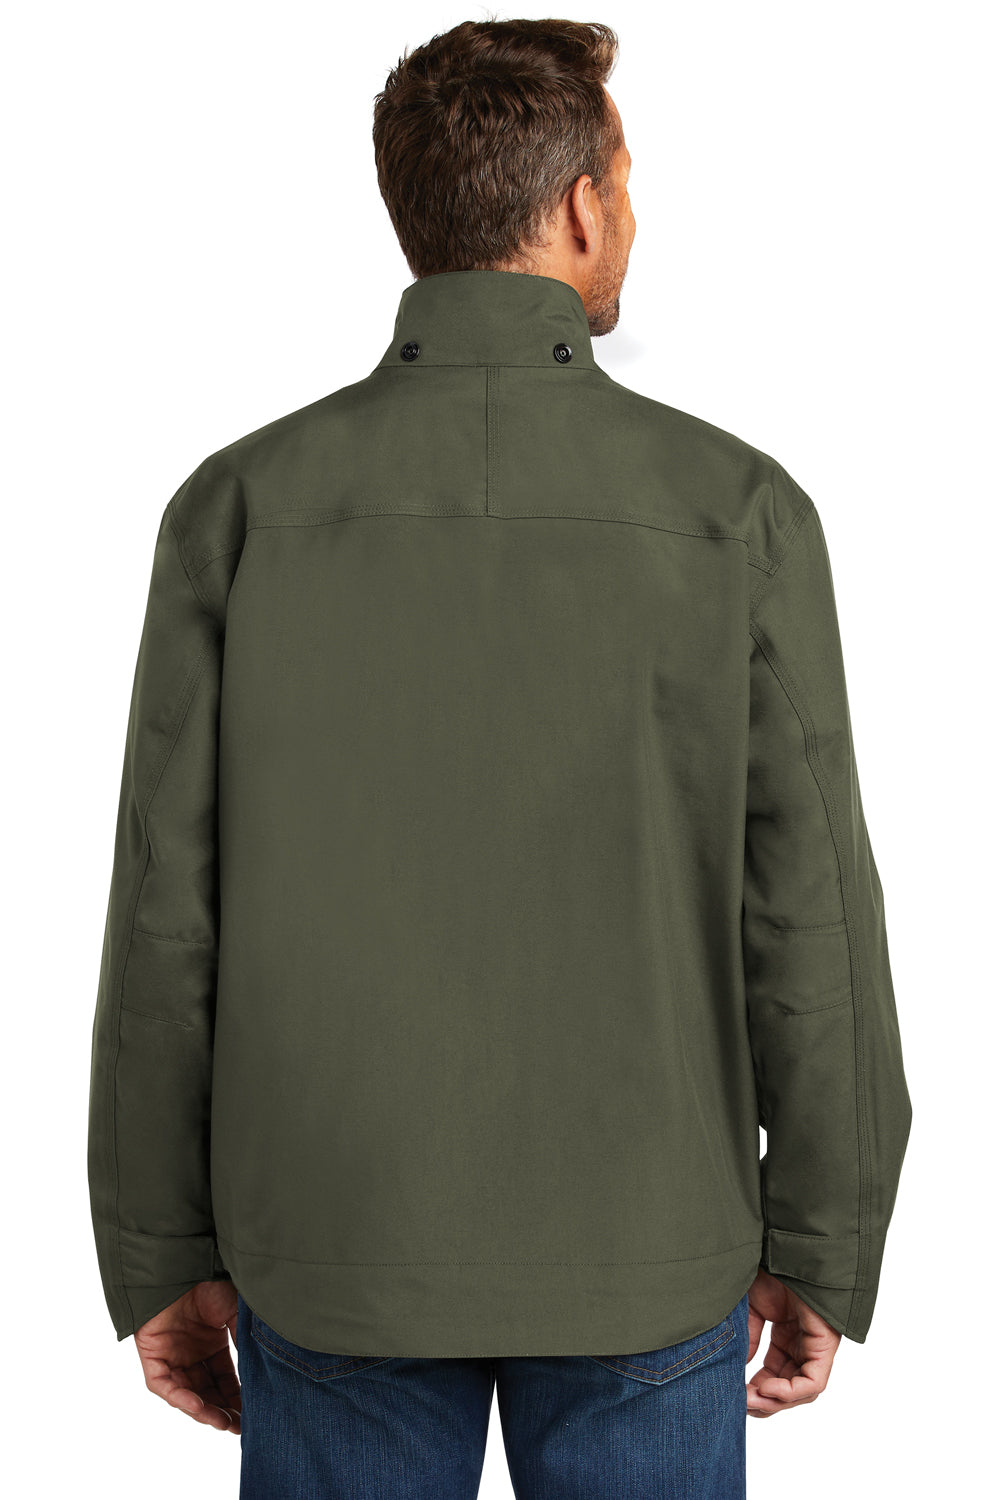 Carhartt CTJ162 Mens Shoreline Waterproof Full Zip Hooded Jacket Olive Green Model Back